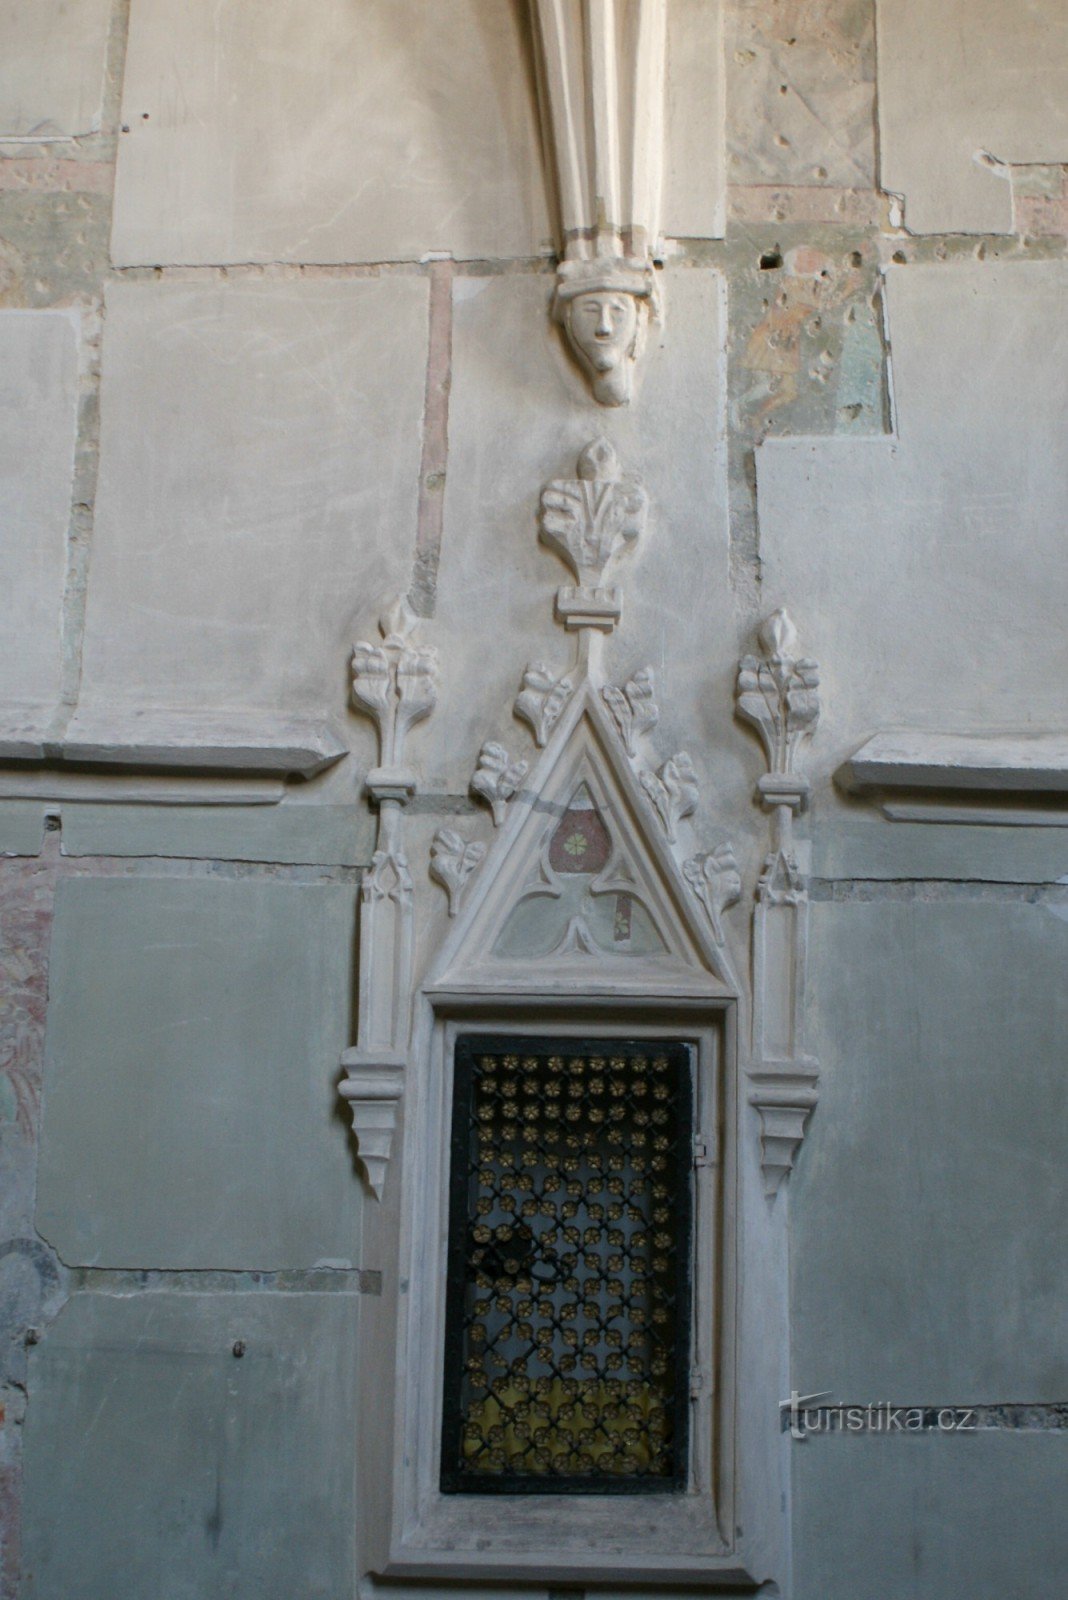 Gotycki w prezbiterium (sanktuarium)